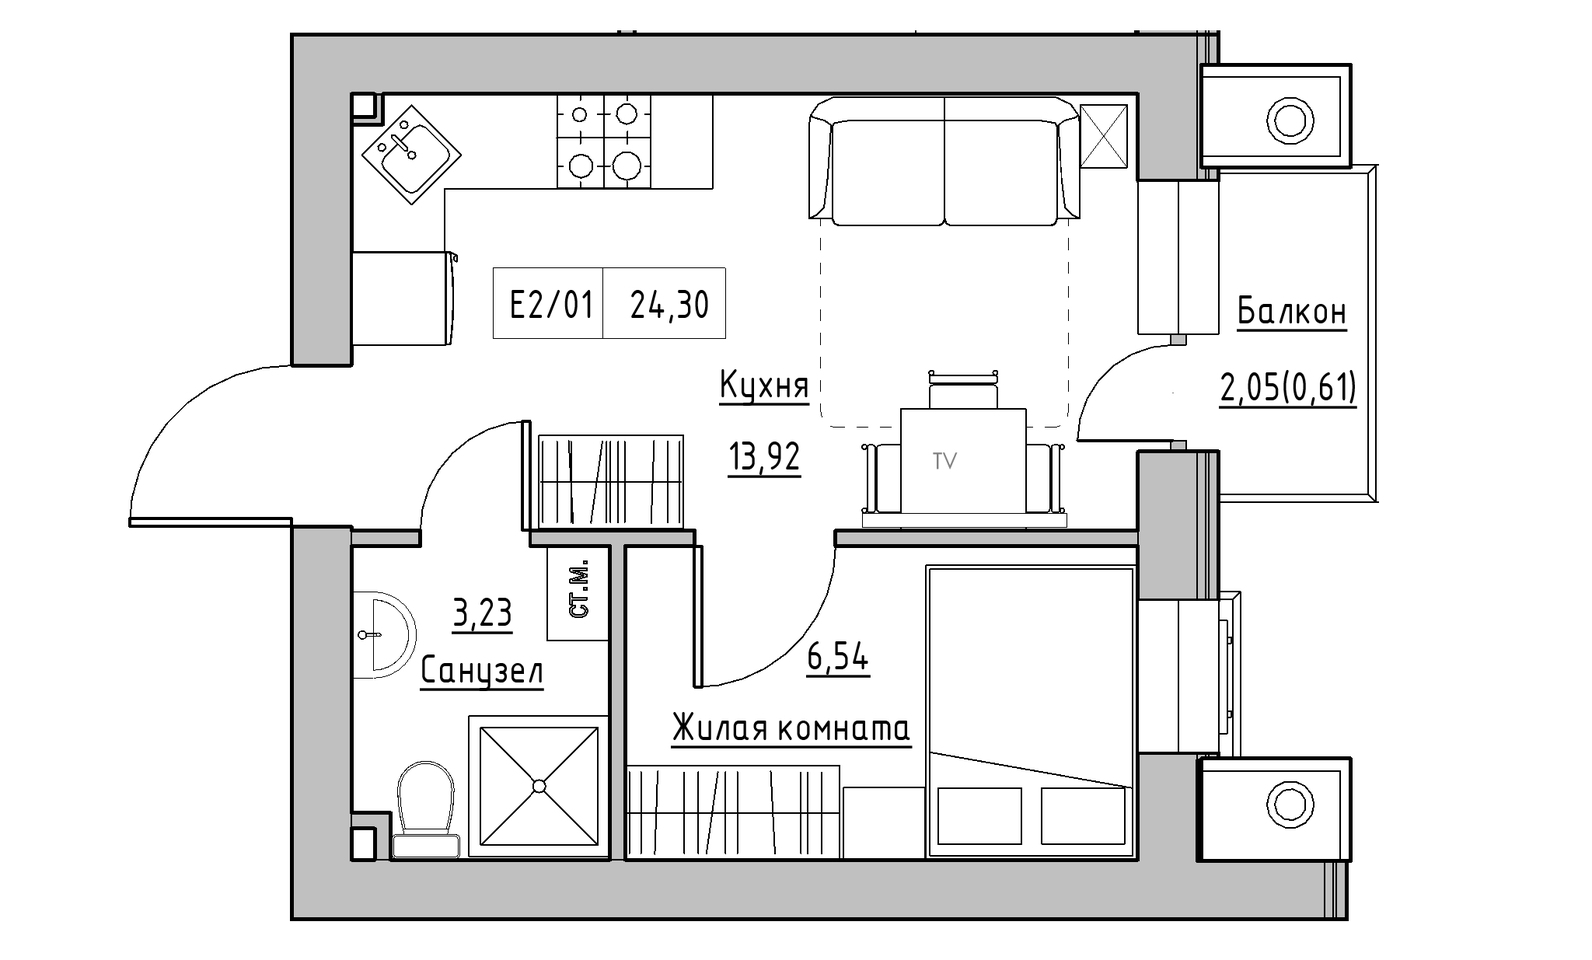 Planning 1-rm flats area 24.3m2, KS-014-03/0009.